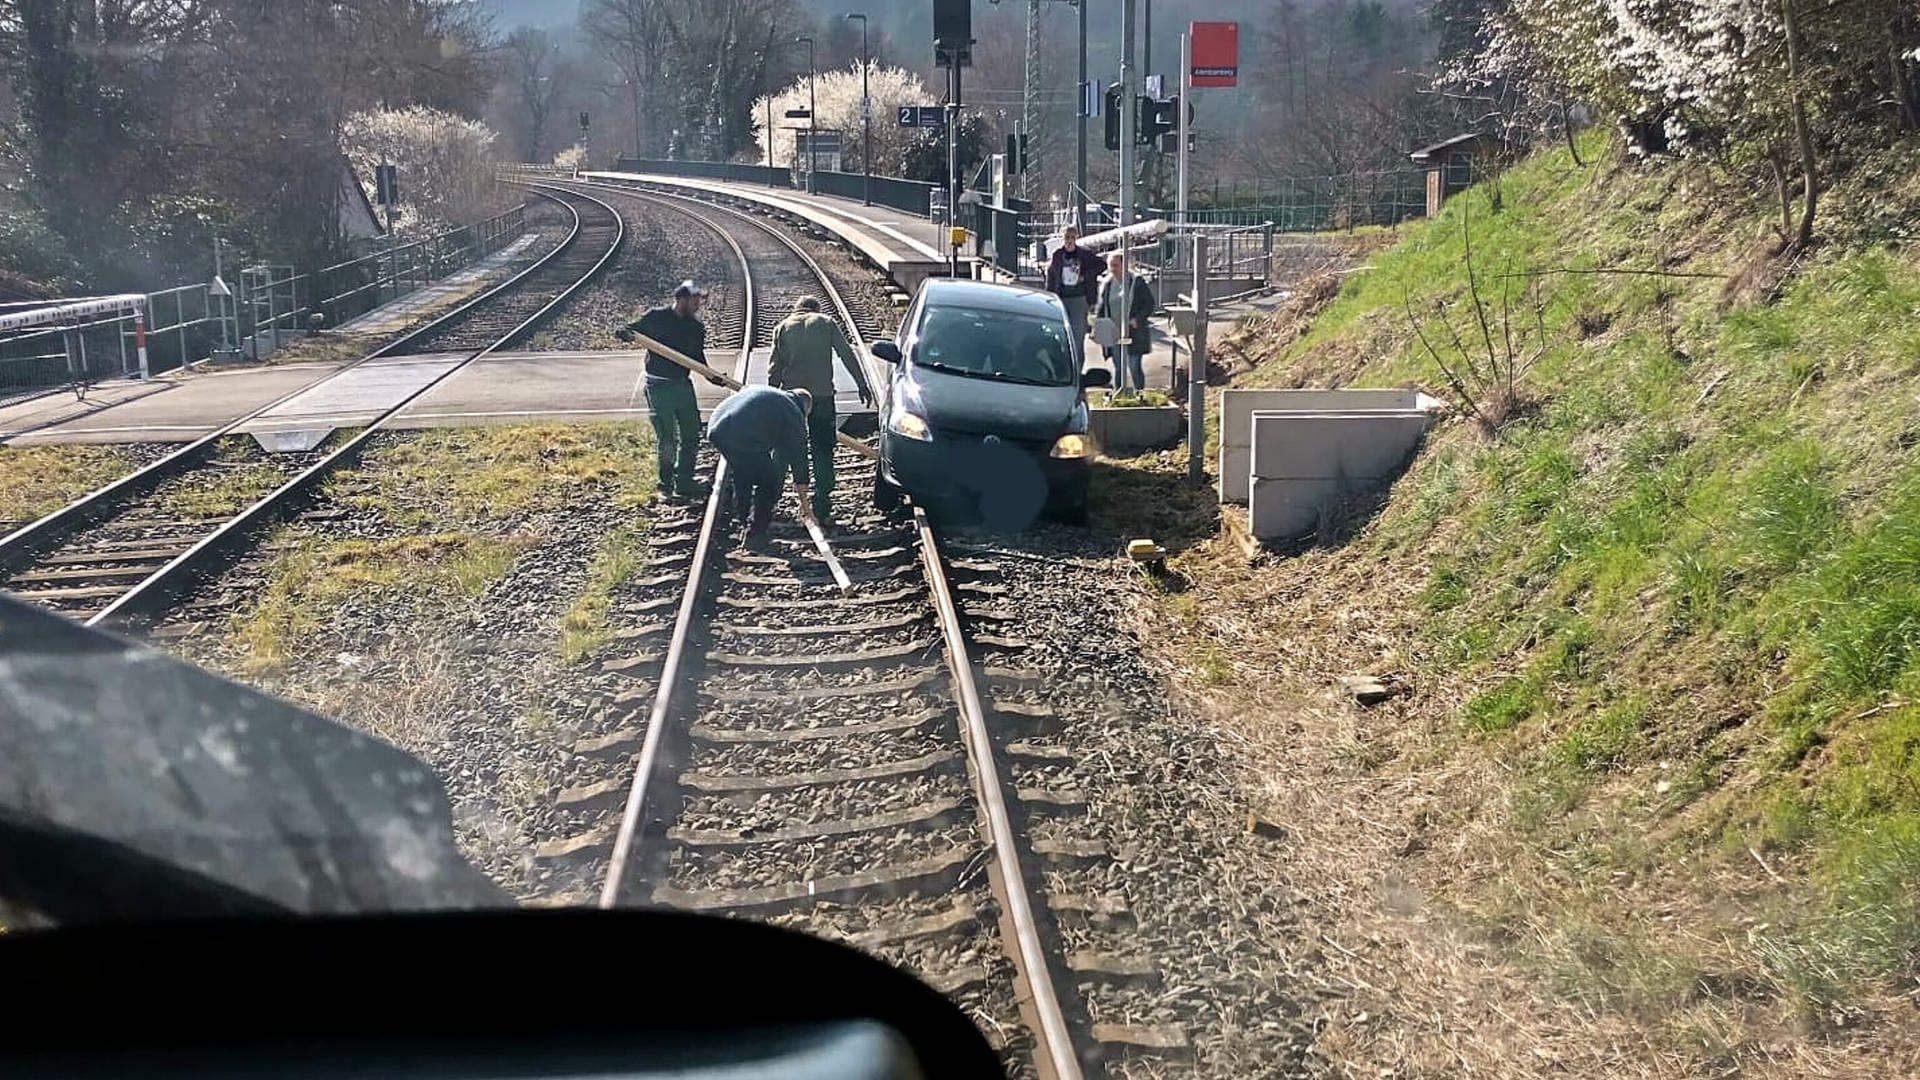 Frau lenkt Auto mit Kindern auf Bahngleise bei Bad Kreuznach